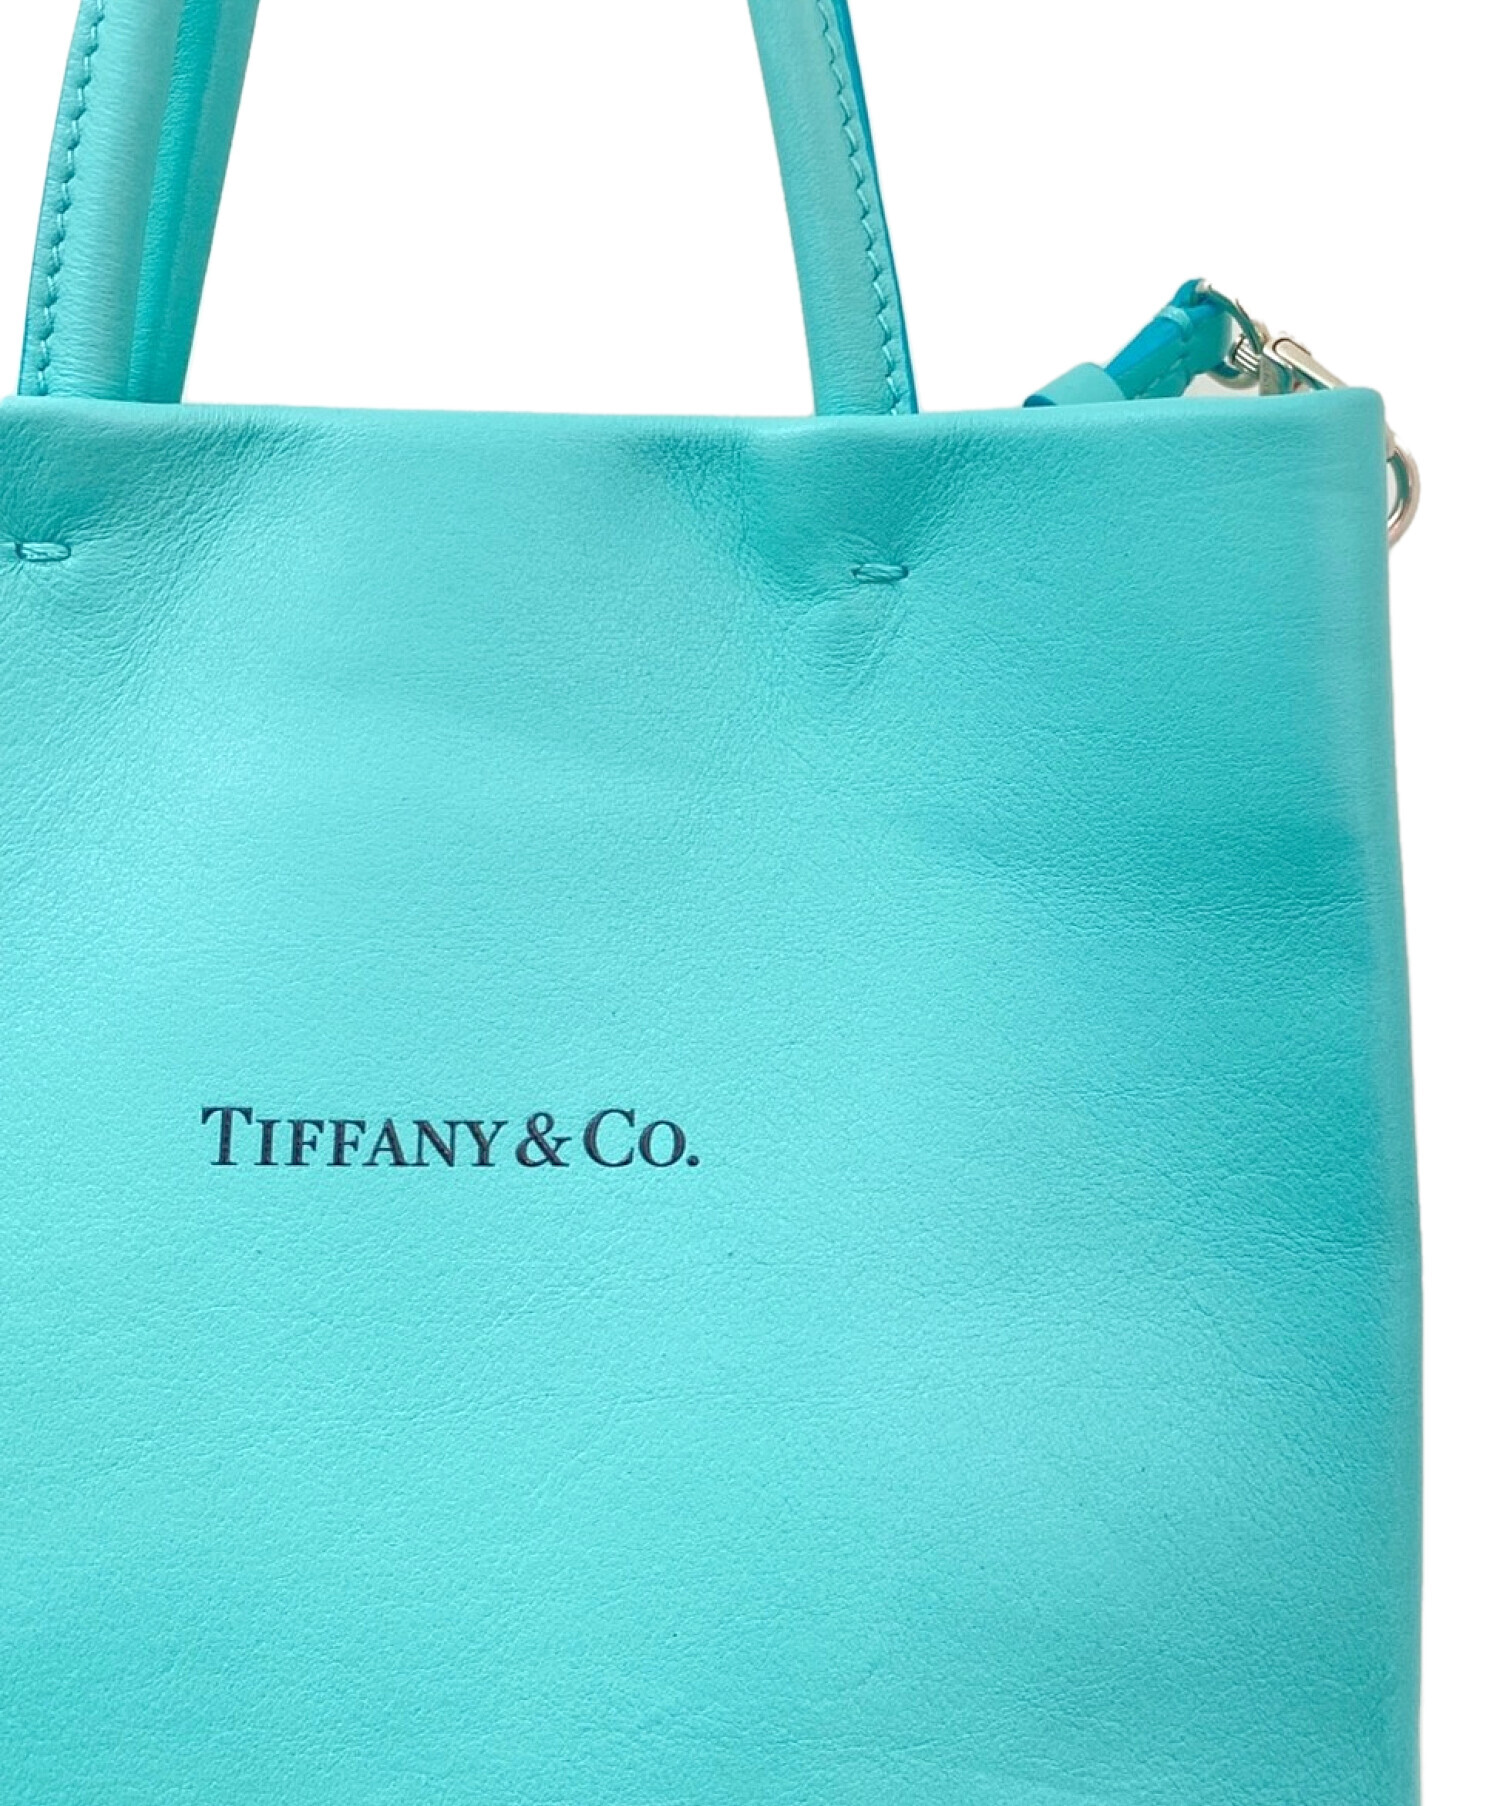 TIFFANY & Co. (ティファニー) ショッピングトートバッグミニ エメラルドグリーン サイズ:-